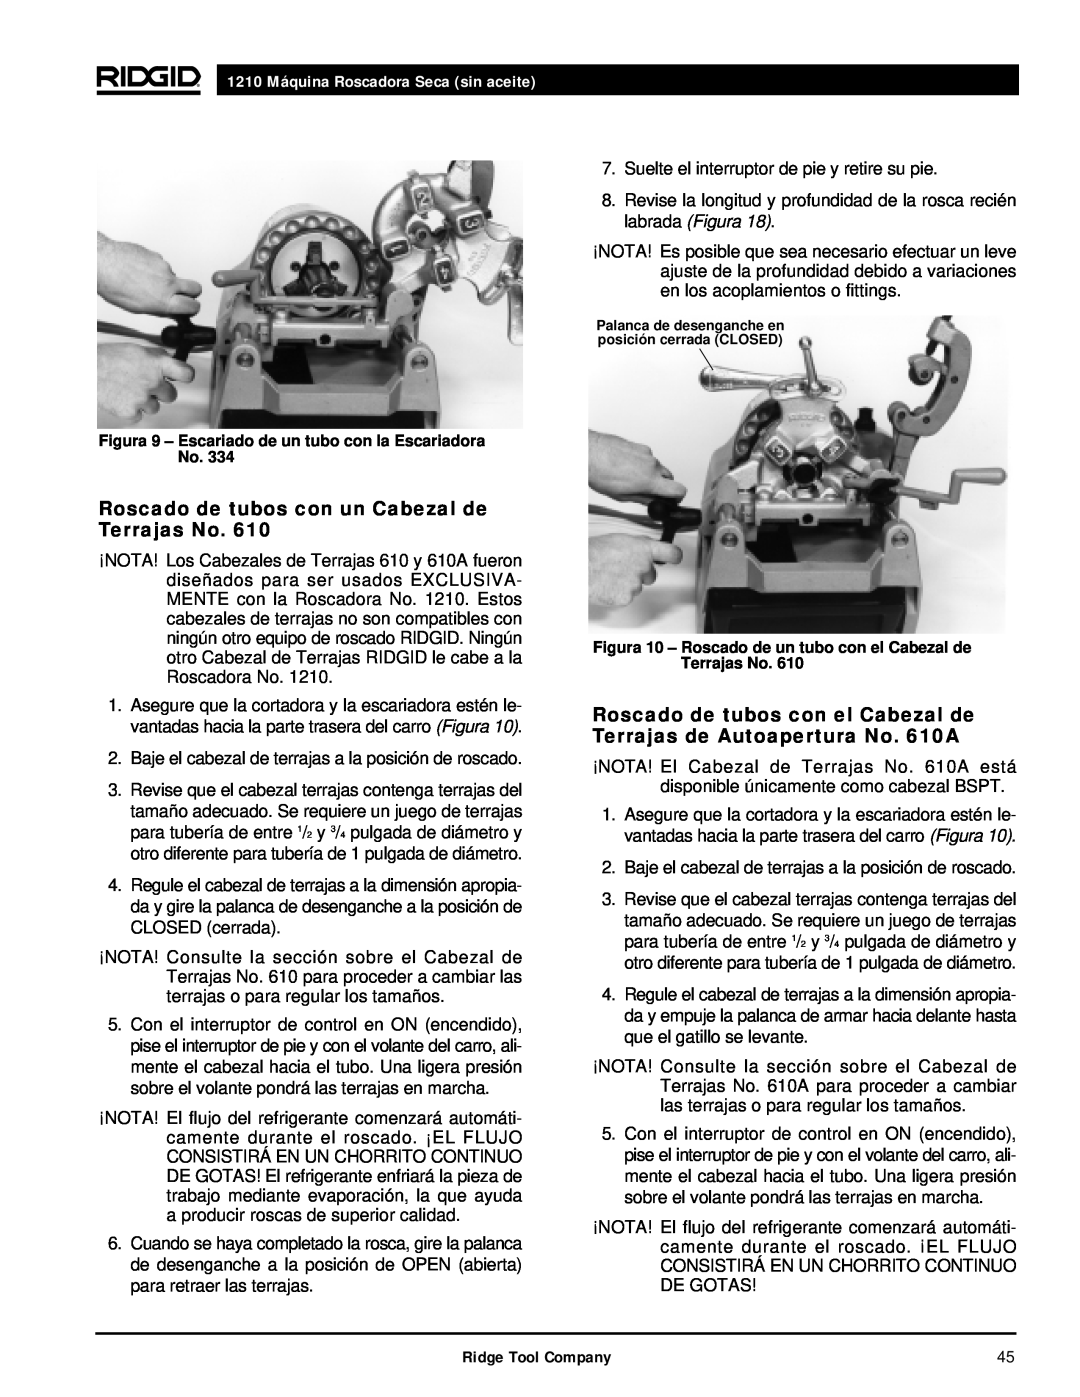 RIDGID manual Roscado de tubos con un Cabezal de Terrajas No, 1210 Máquina Roscadora Seca sin aceite 